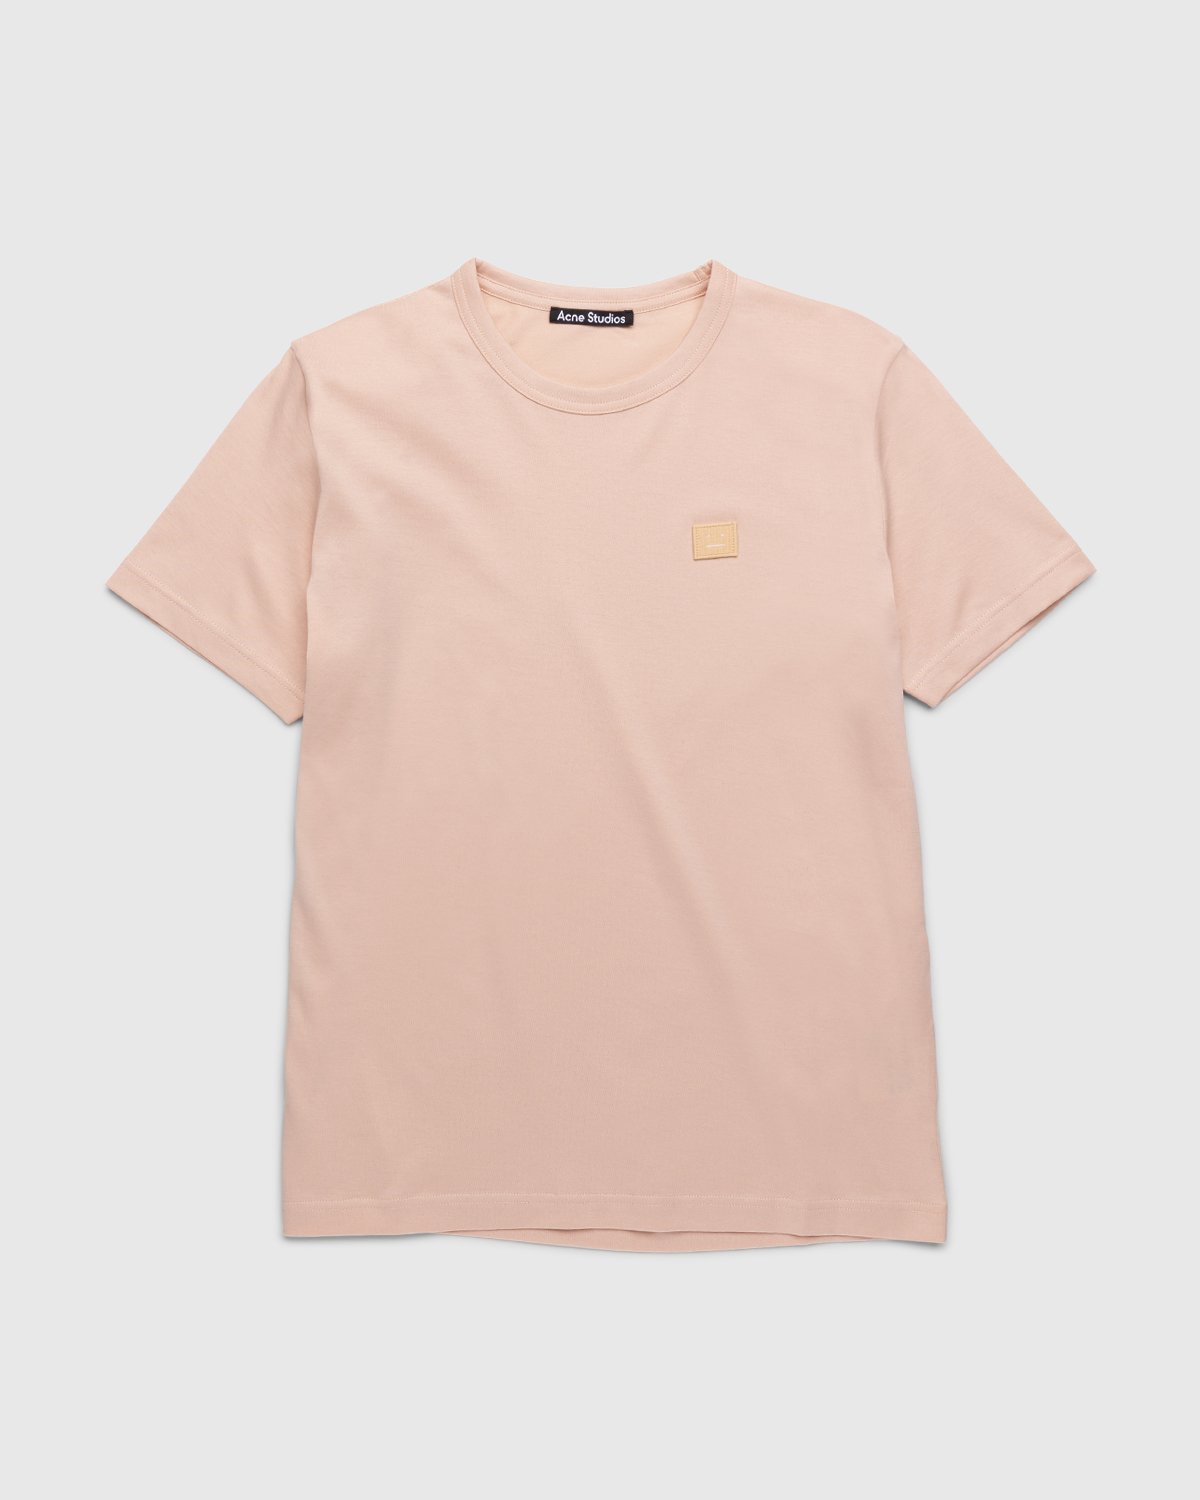 Acne Studios - Slim Fit T-Shirt Powder Pink - Clothing - Pink - Image 1